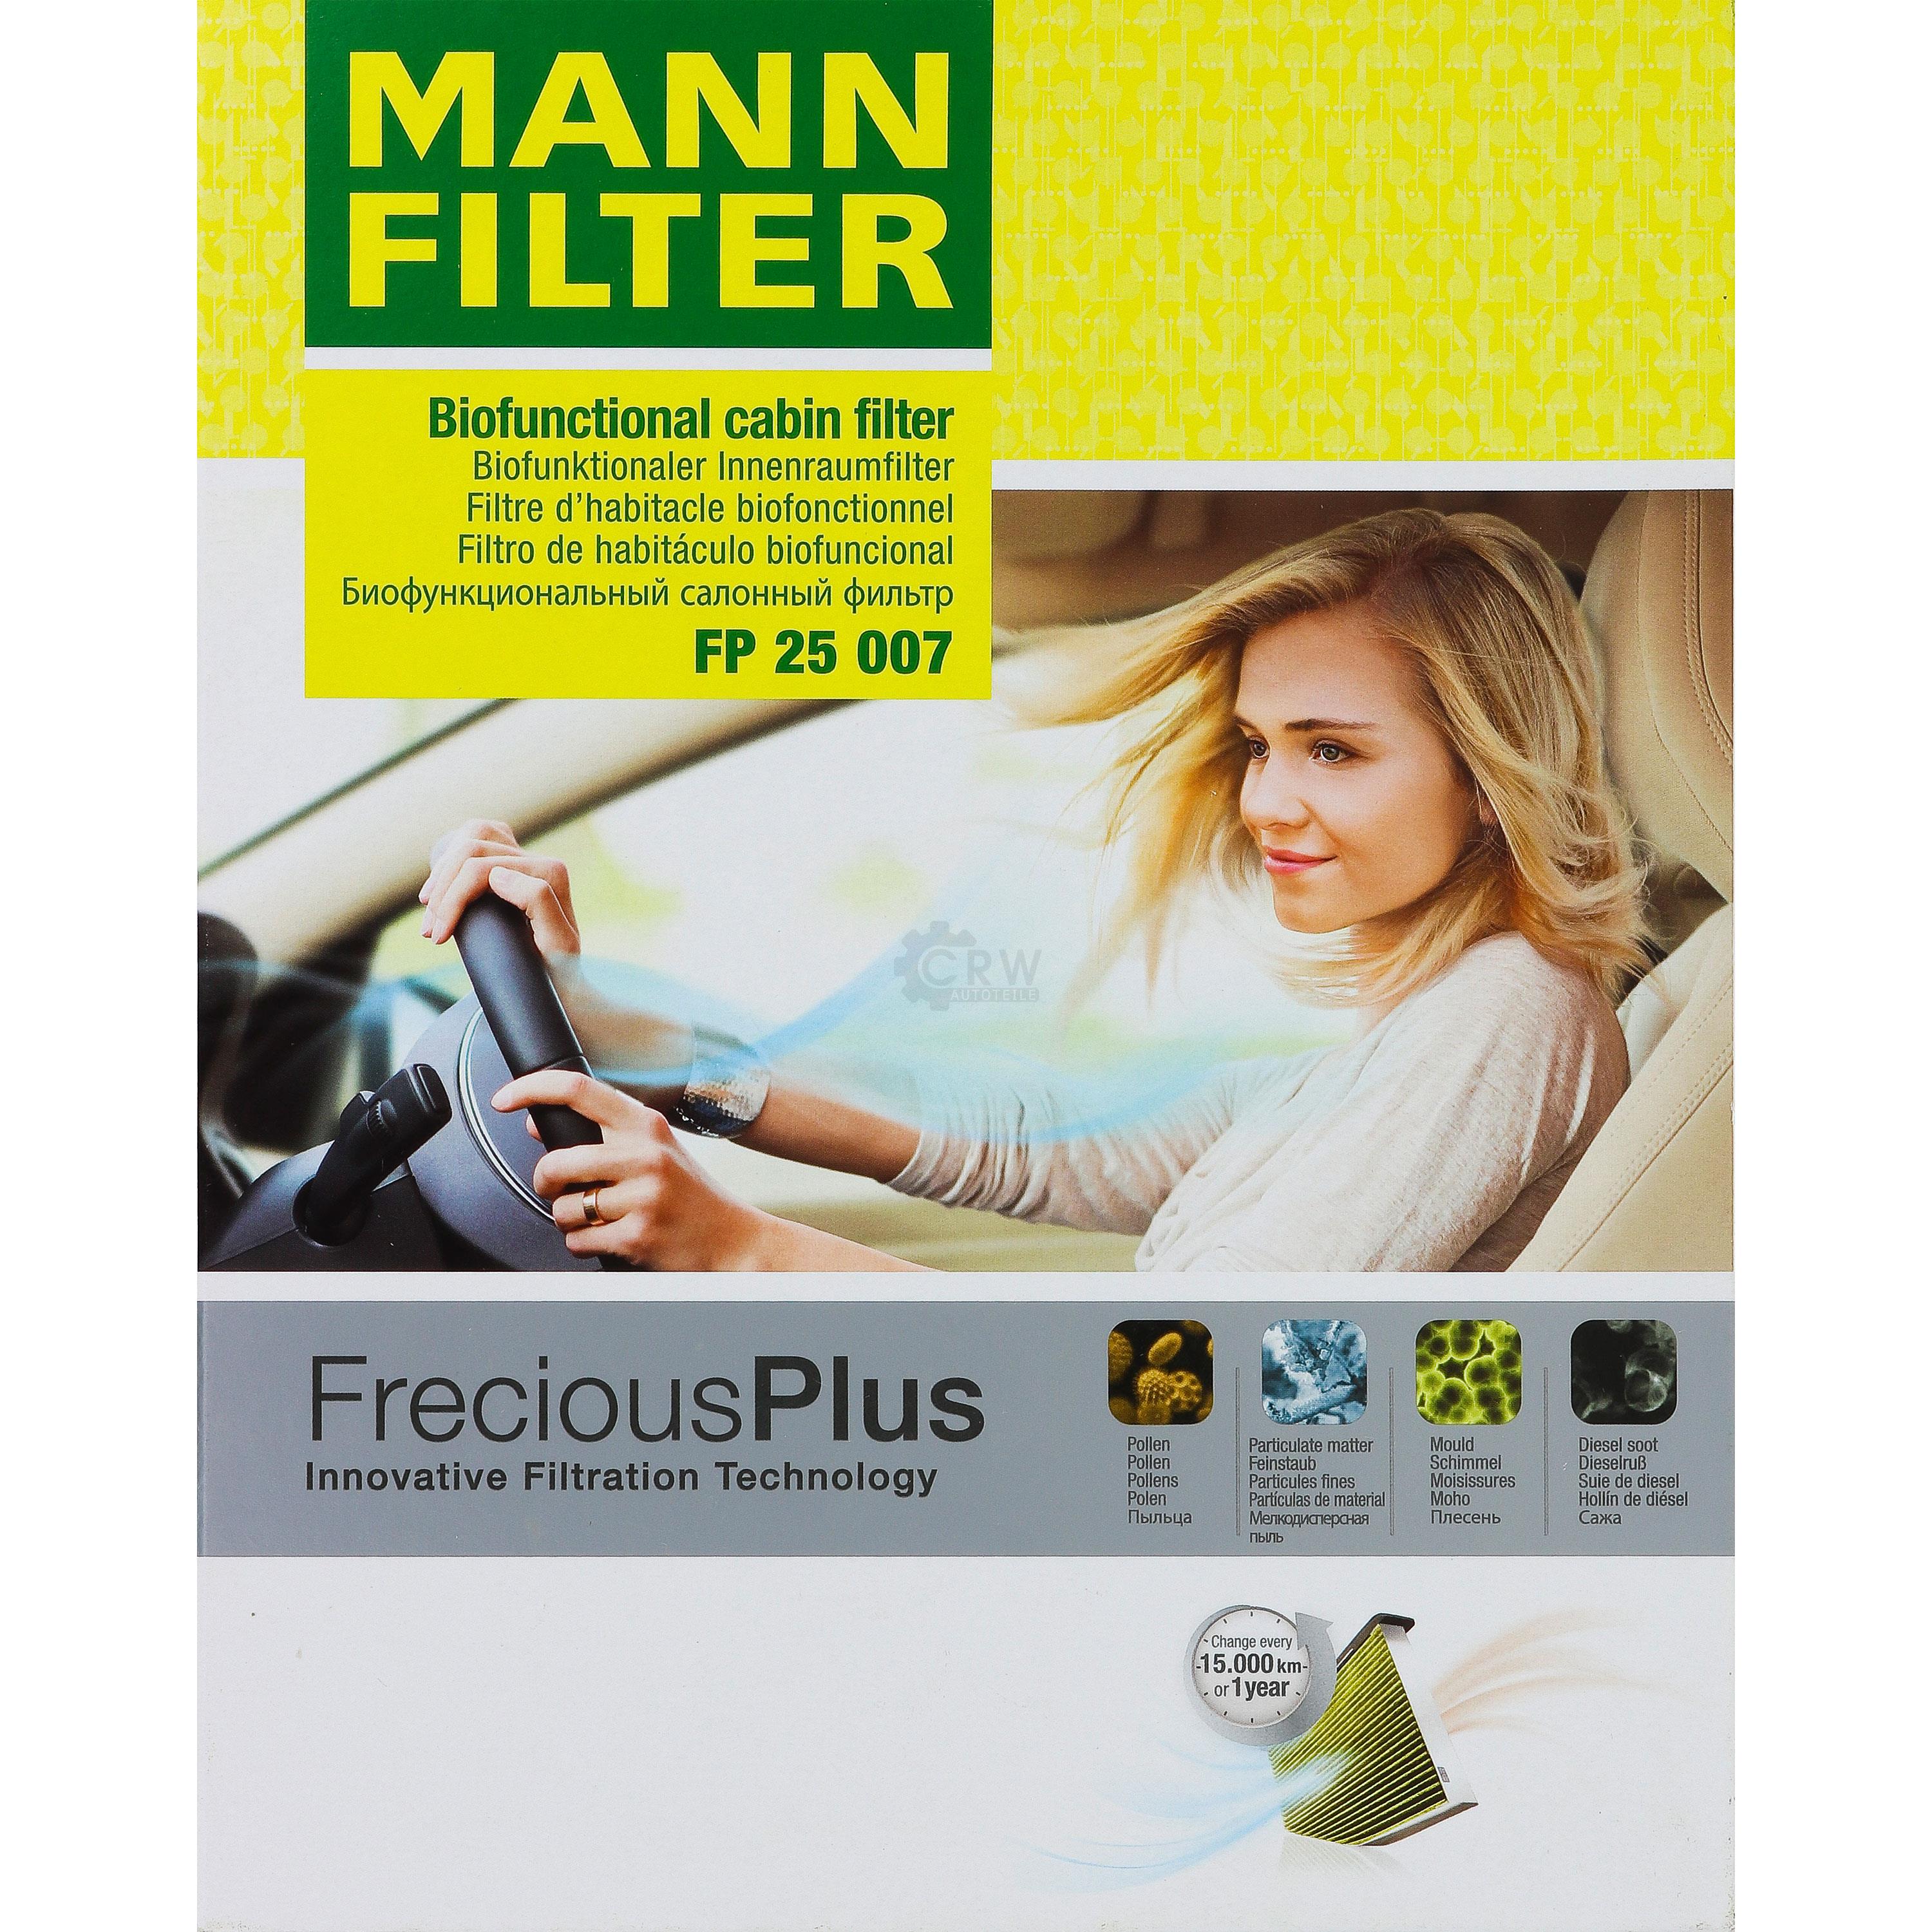 MANN-Filter Innenraumfilter Biofunctional für Allergiker FP 25 007